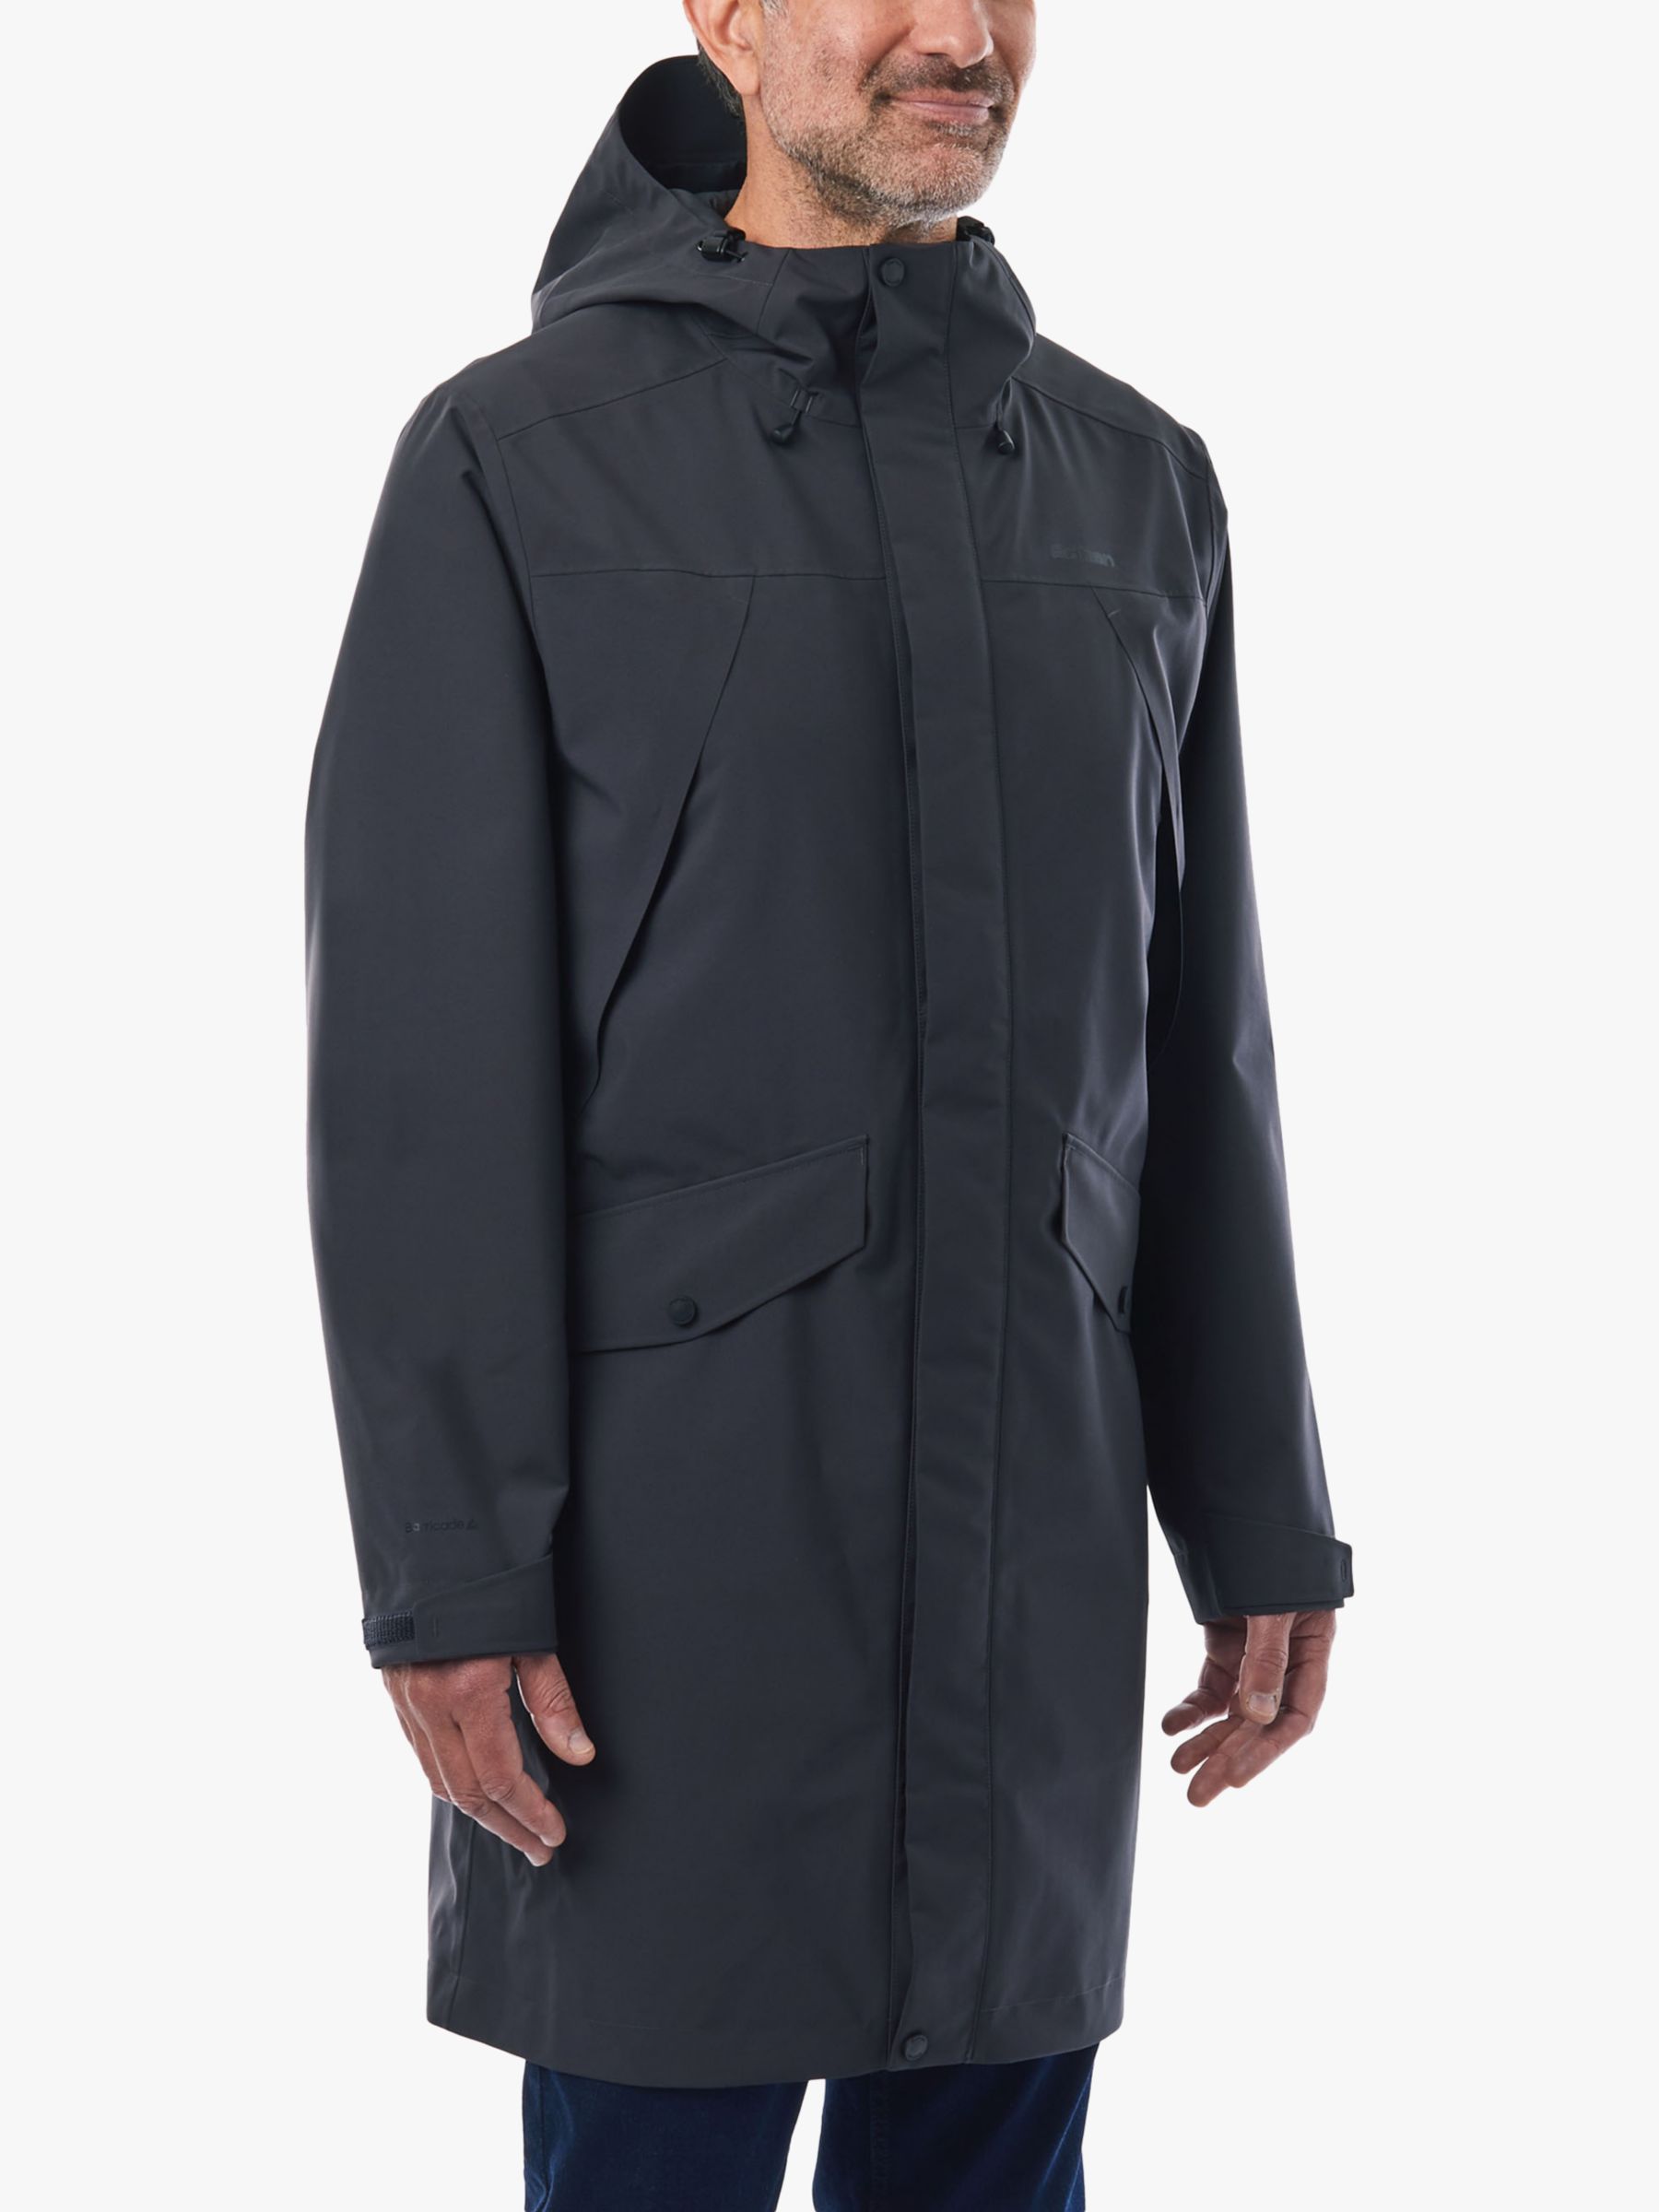 Rohan Kendal Men's Waterproof Jacket, True Navy at John Lewis & Partners